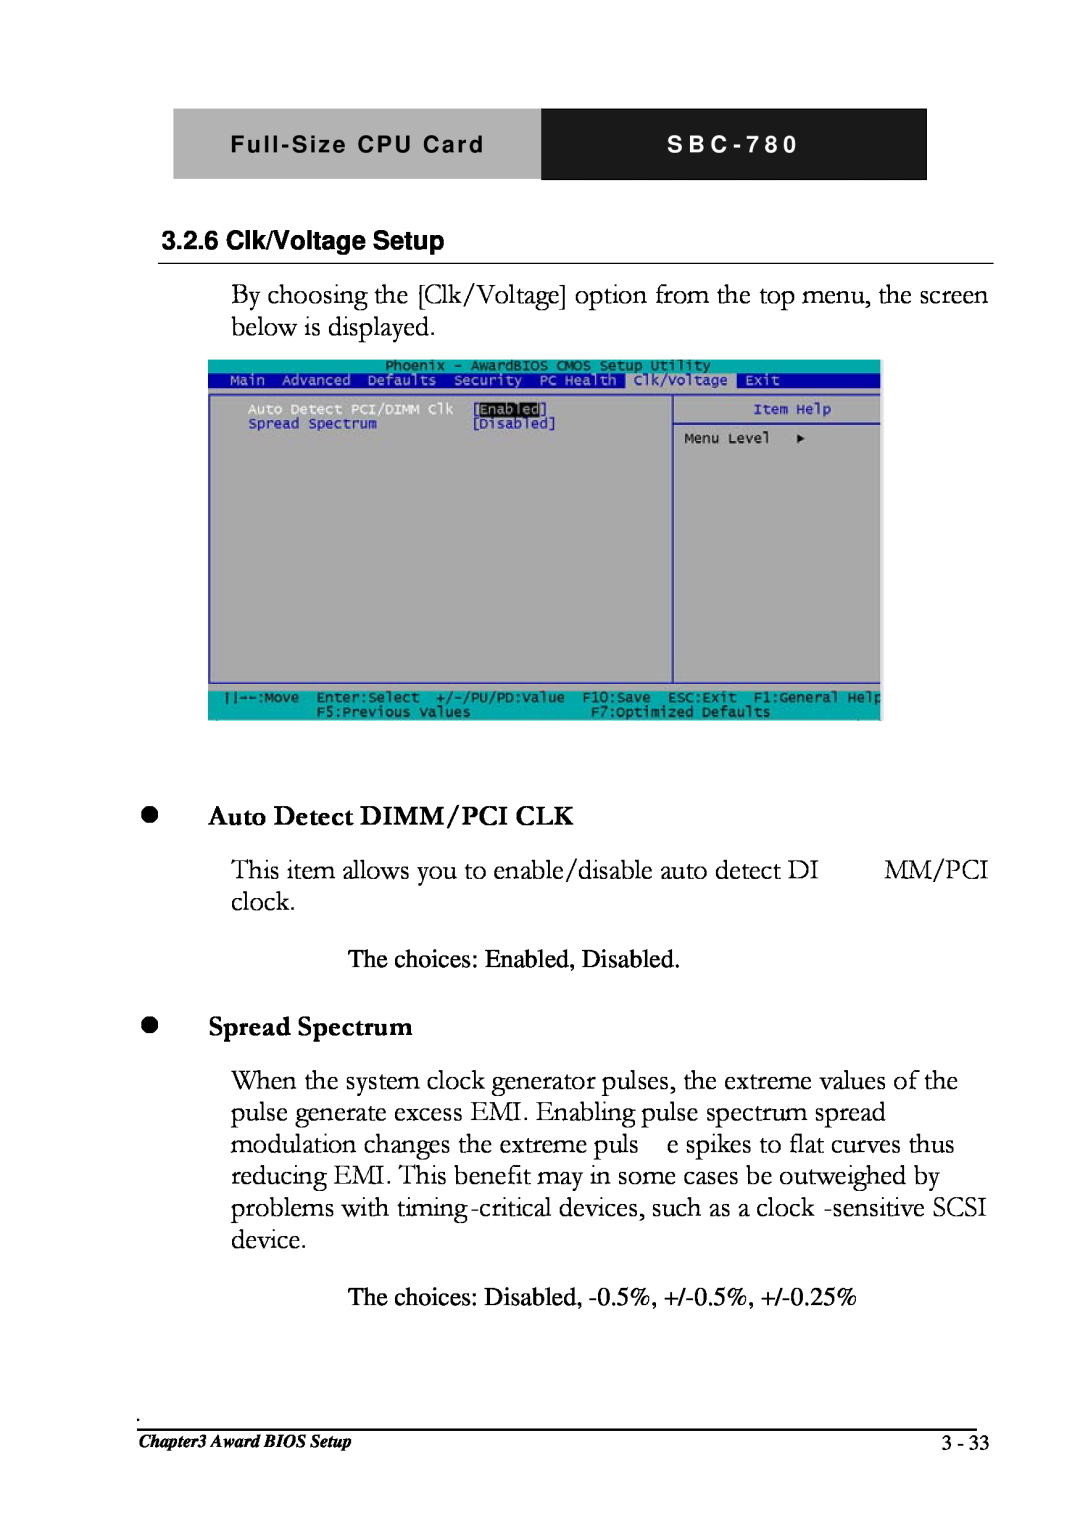 Intel SBC-780 manual  Auto Detect DIMM/PCI CLK, Spread Spectrum 